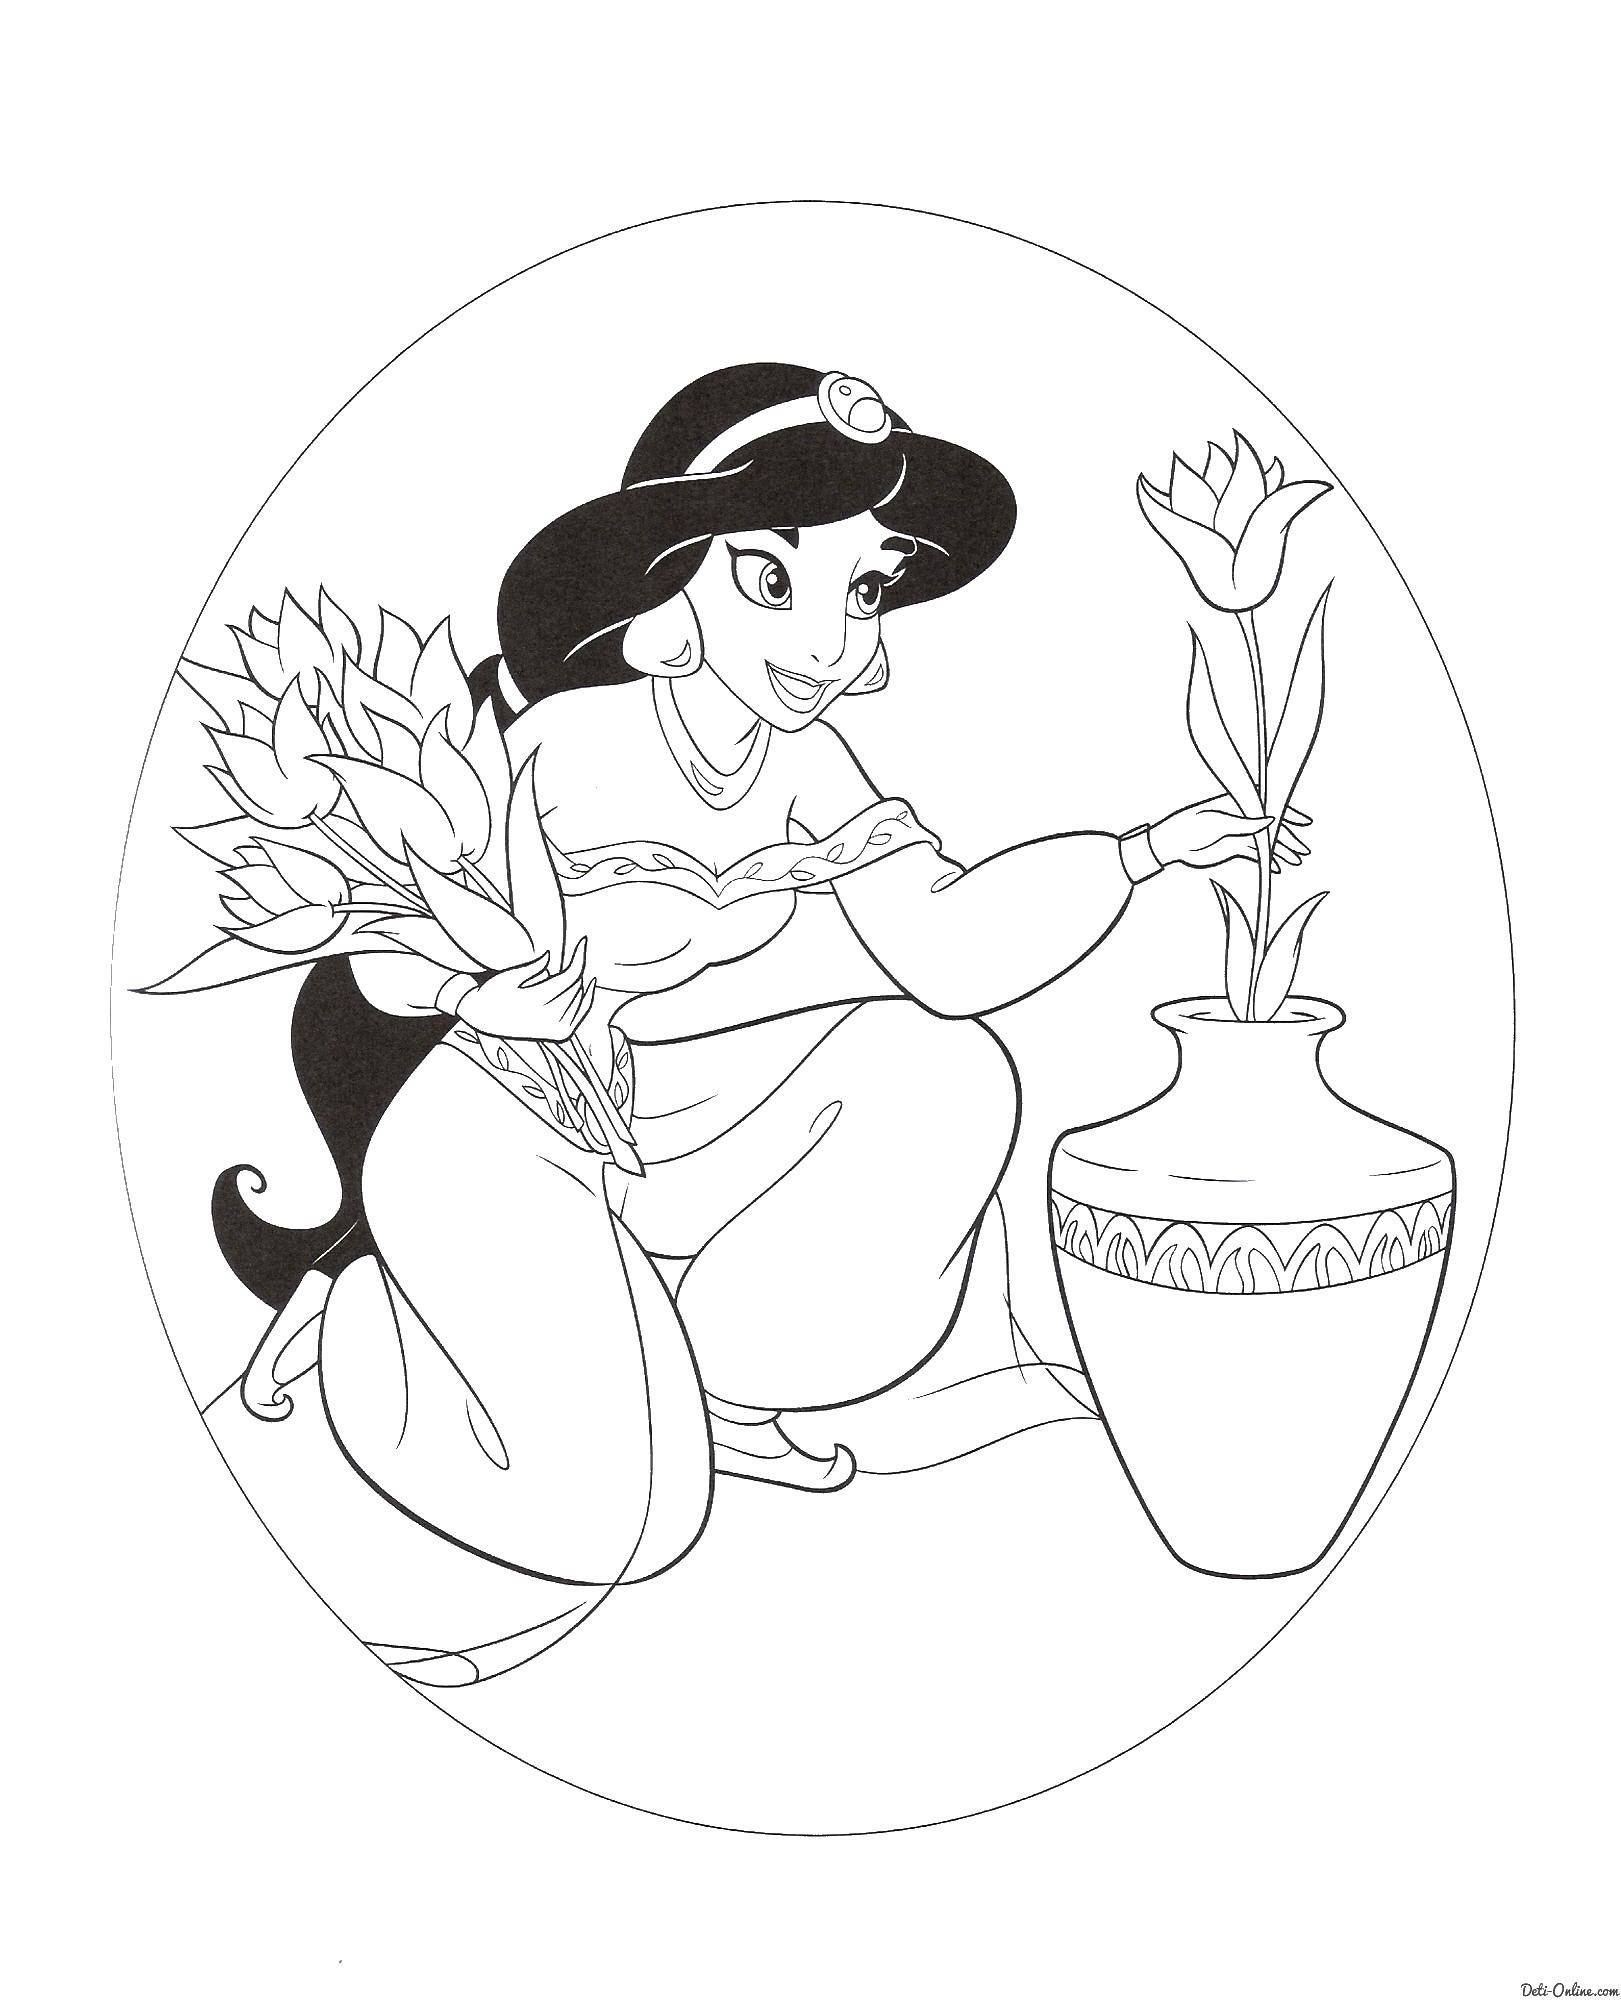 Название: Раскраска Принцесса жасмин и цветы. Категория: принцесса. Теги: аладдин, жасмин.